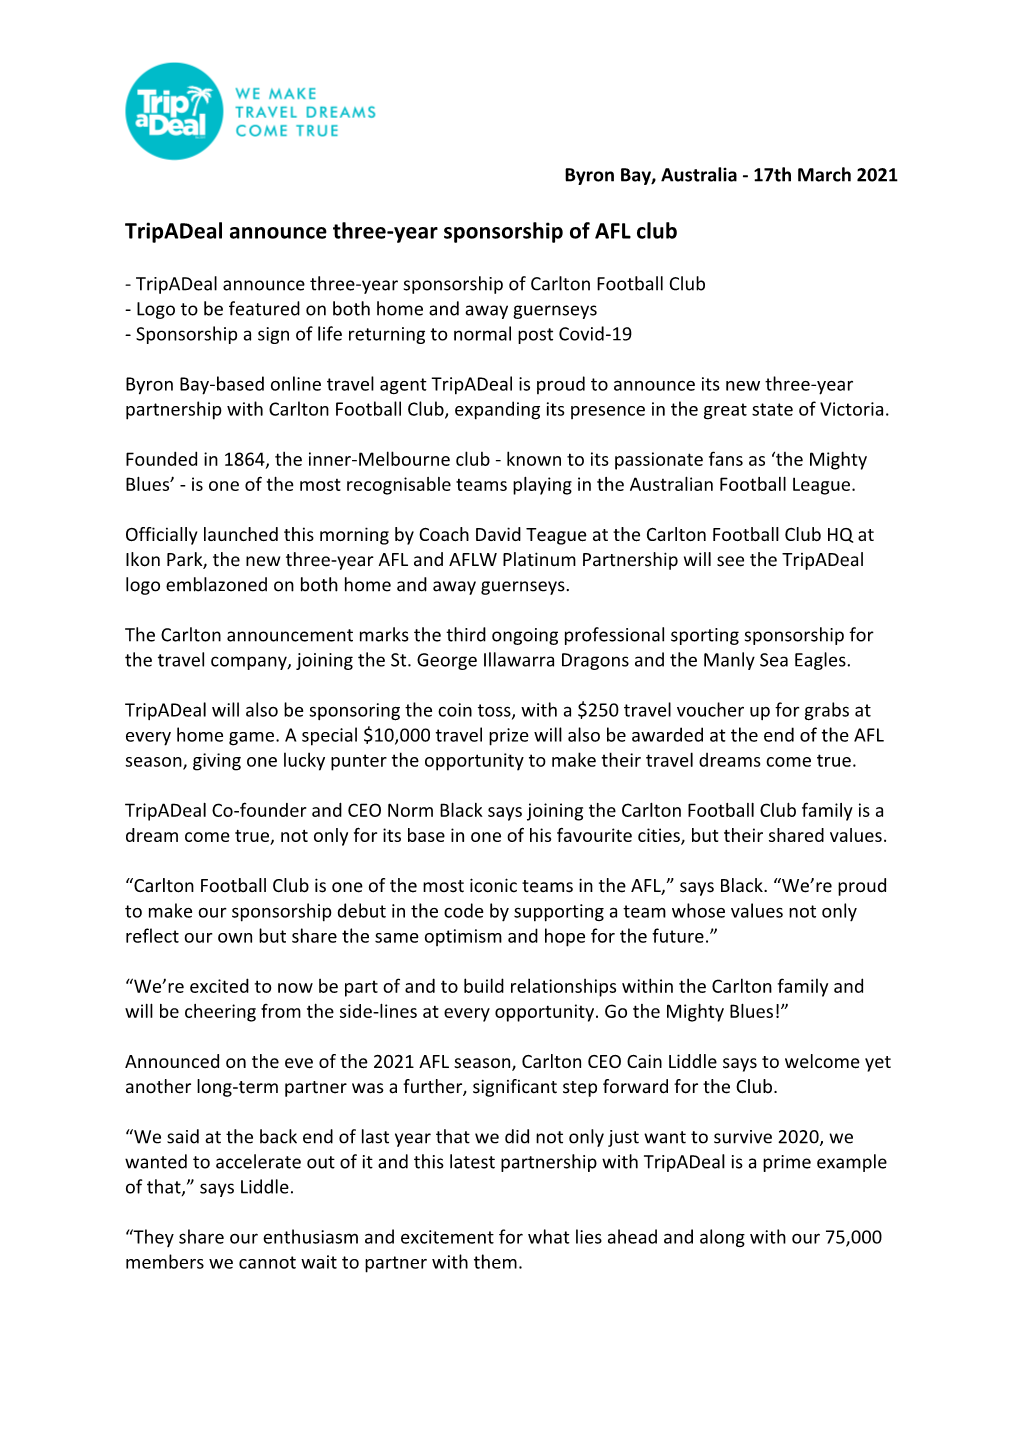 Tripadeal Announce Three-Year Sponsorship of AFL Club